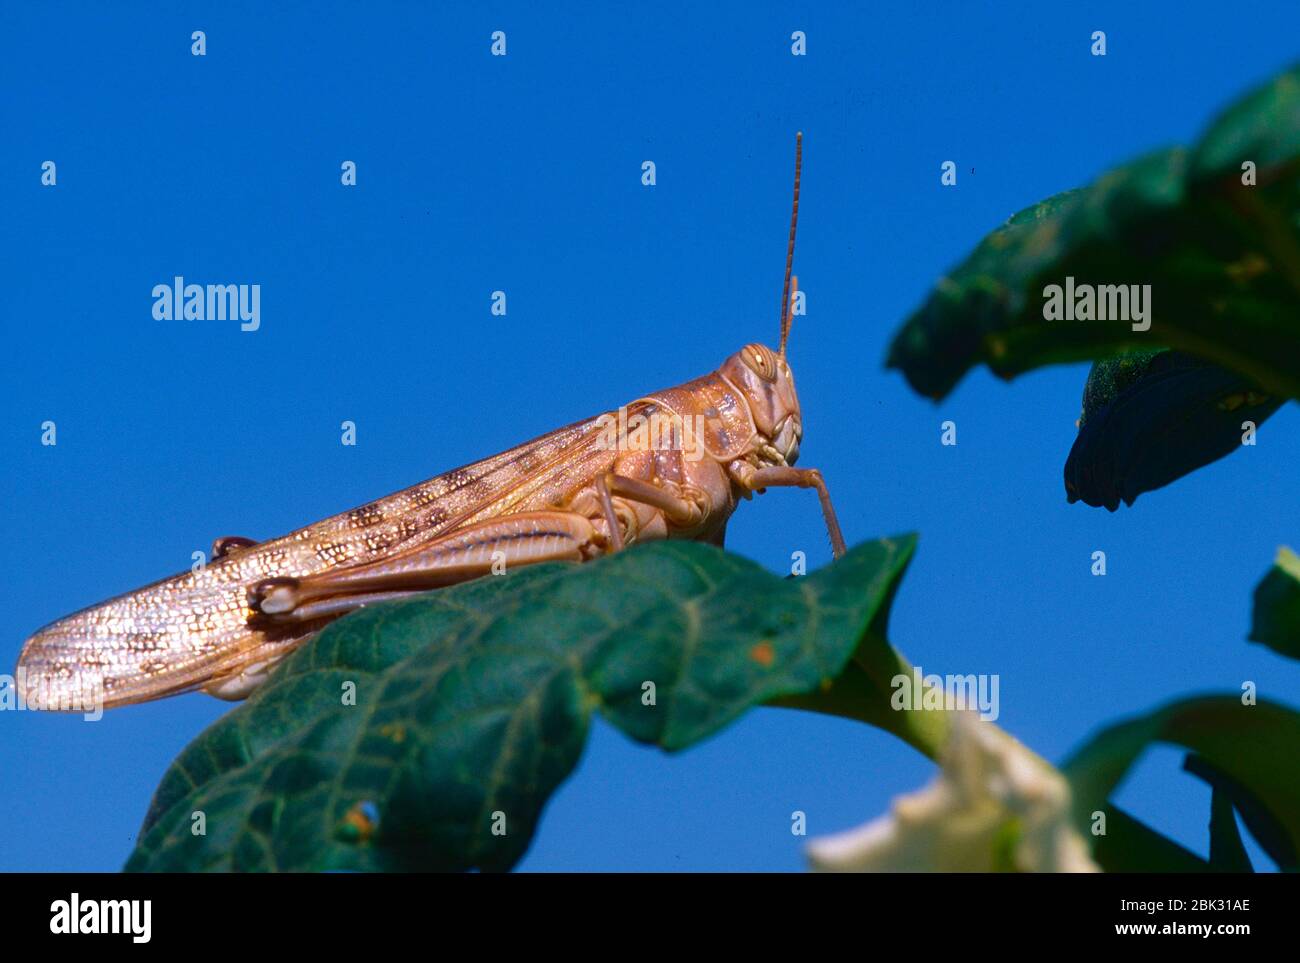 Desert locust, Schistcerca gergaria, Acrididae, locust, insect, animal, desert, Namibia Stock Photo